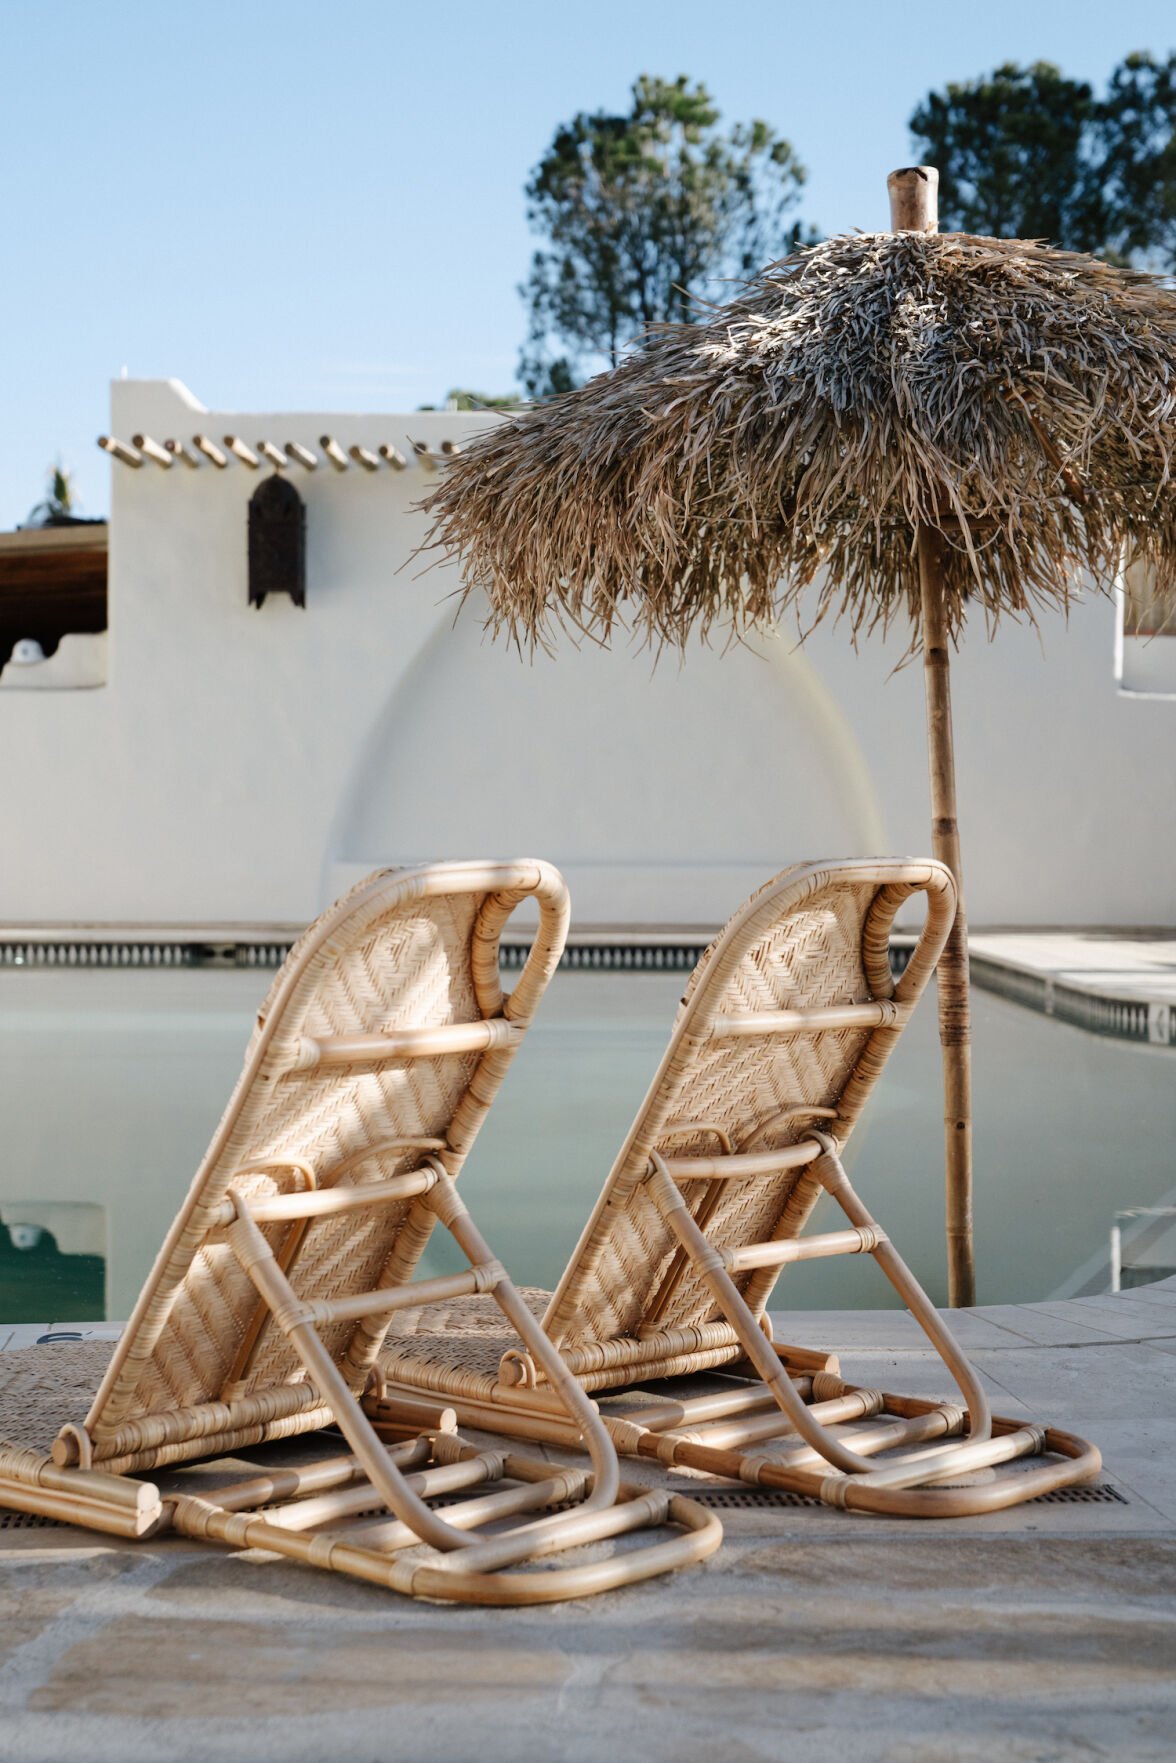 Jacumba Hot Springs Hotel Pool Chairs